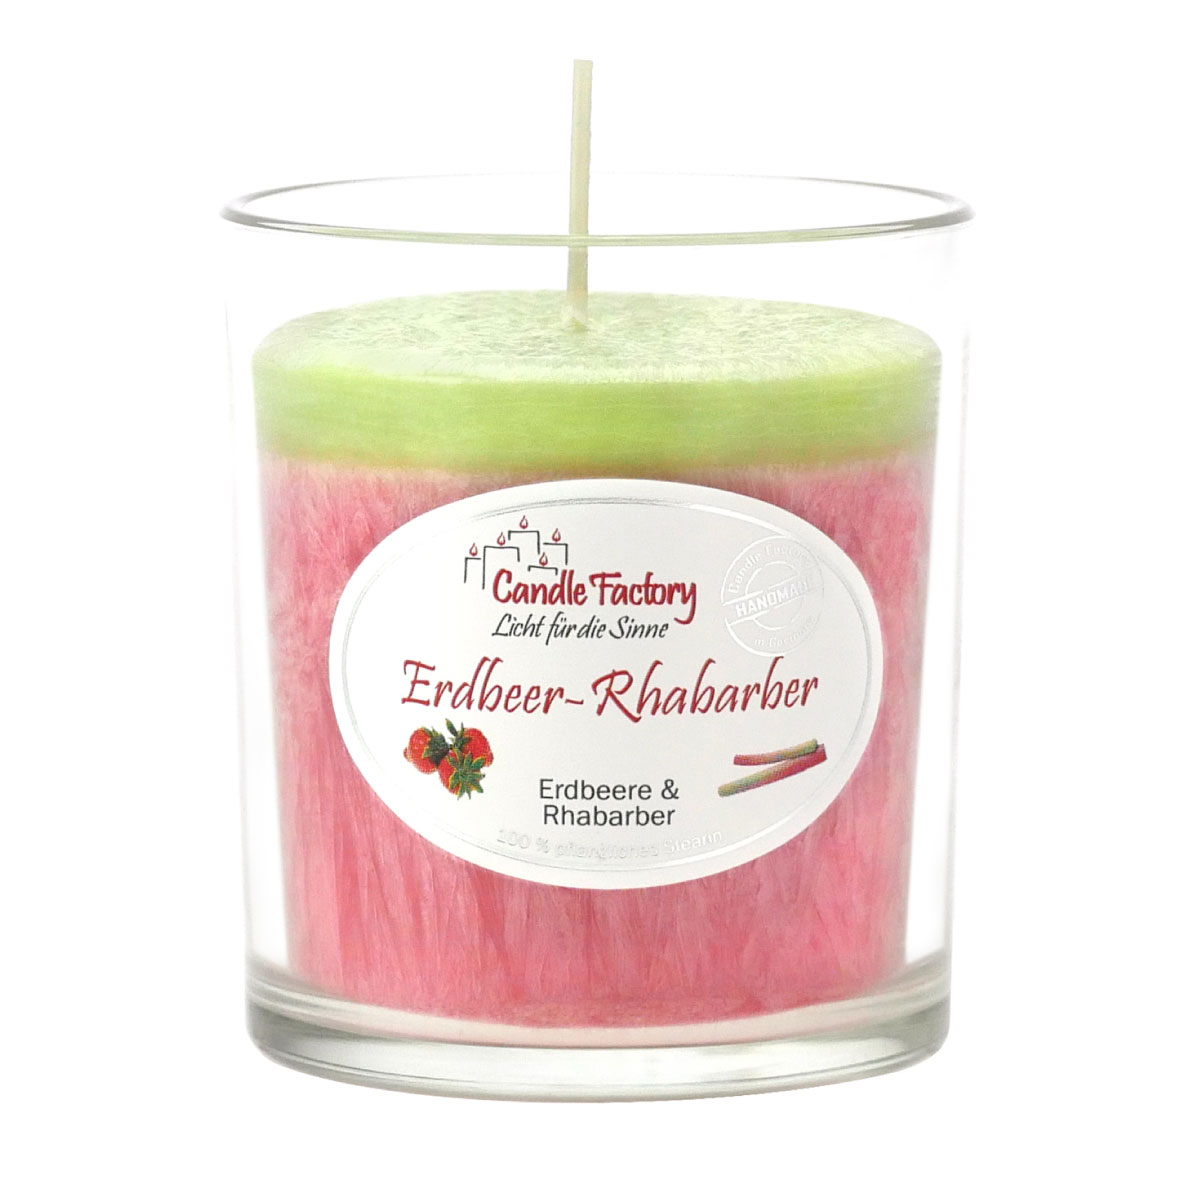 Erdbeer Rhabarber - Party Light Duftkerze von Candle Factory